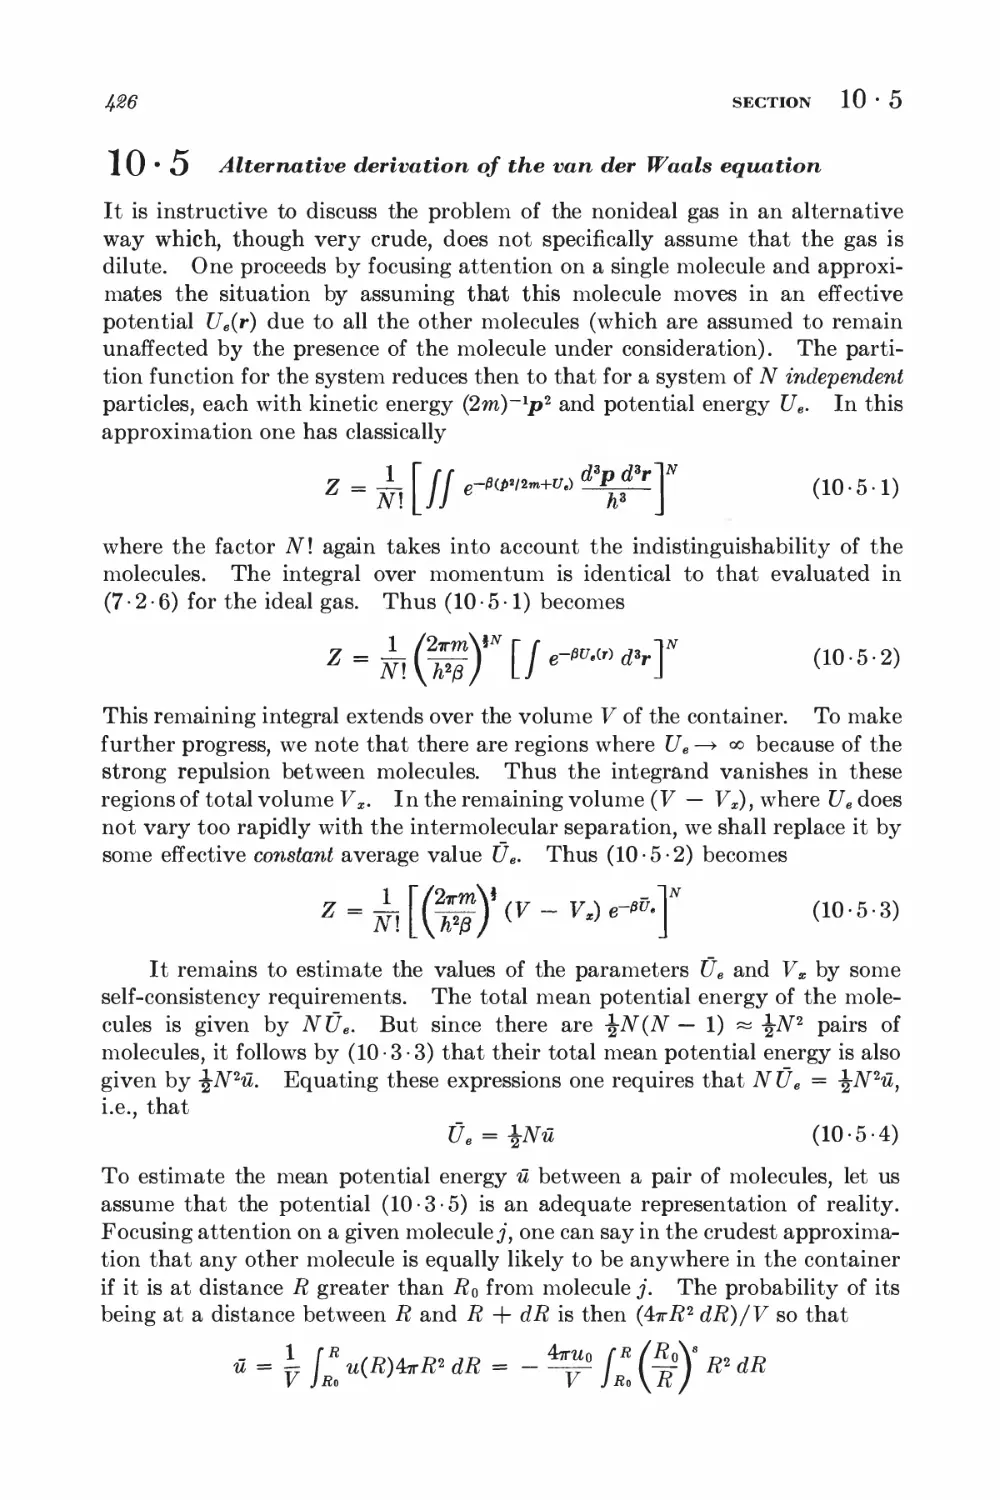 10.5 Alternative derivation of the van der Waals equation